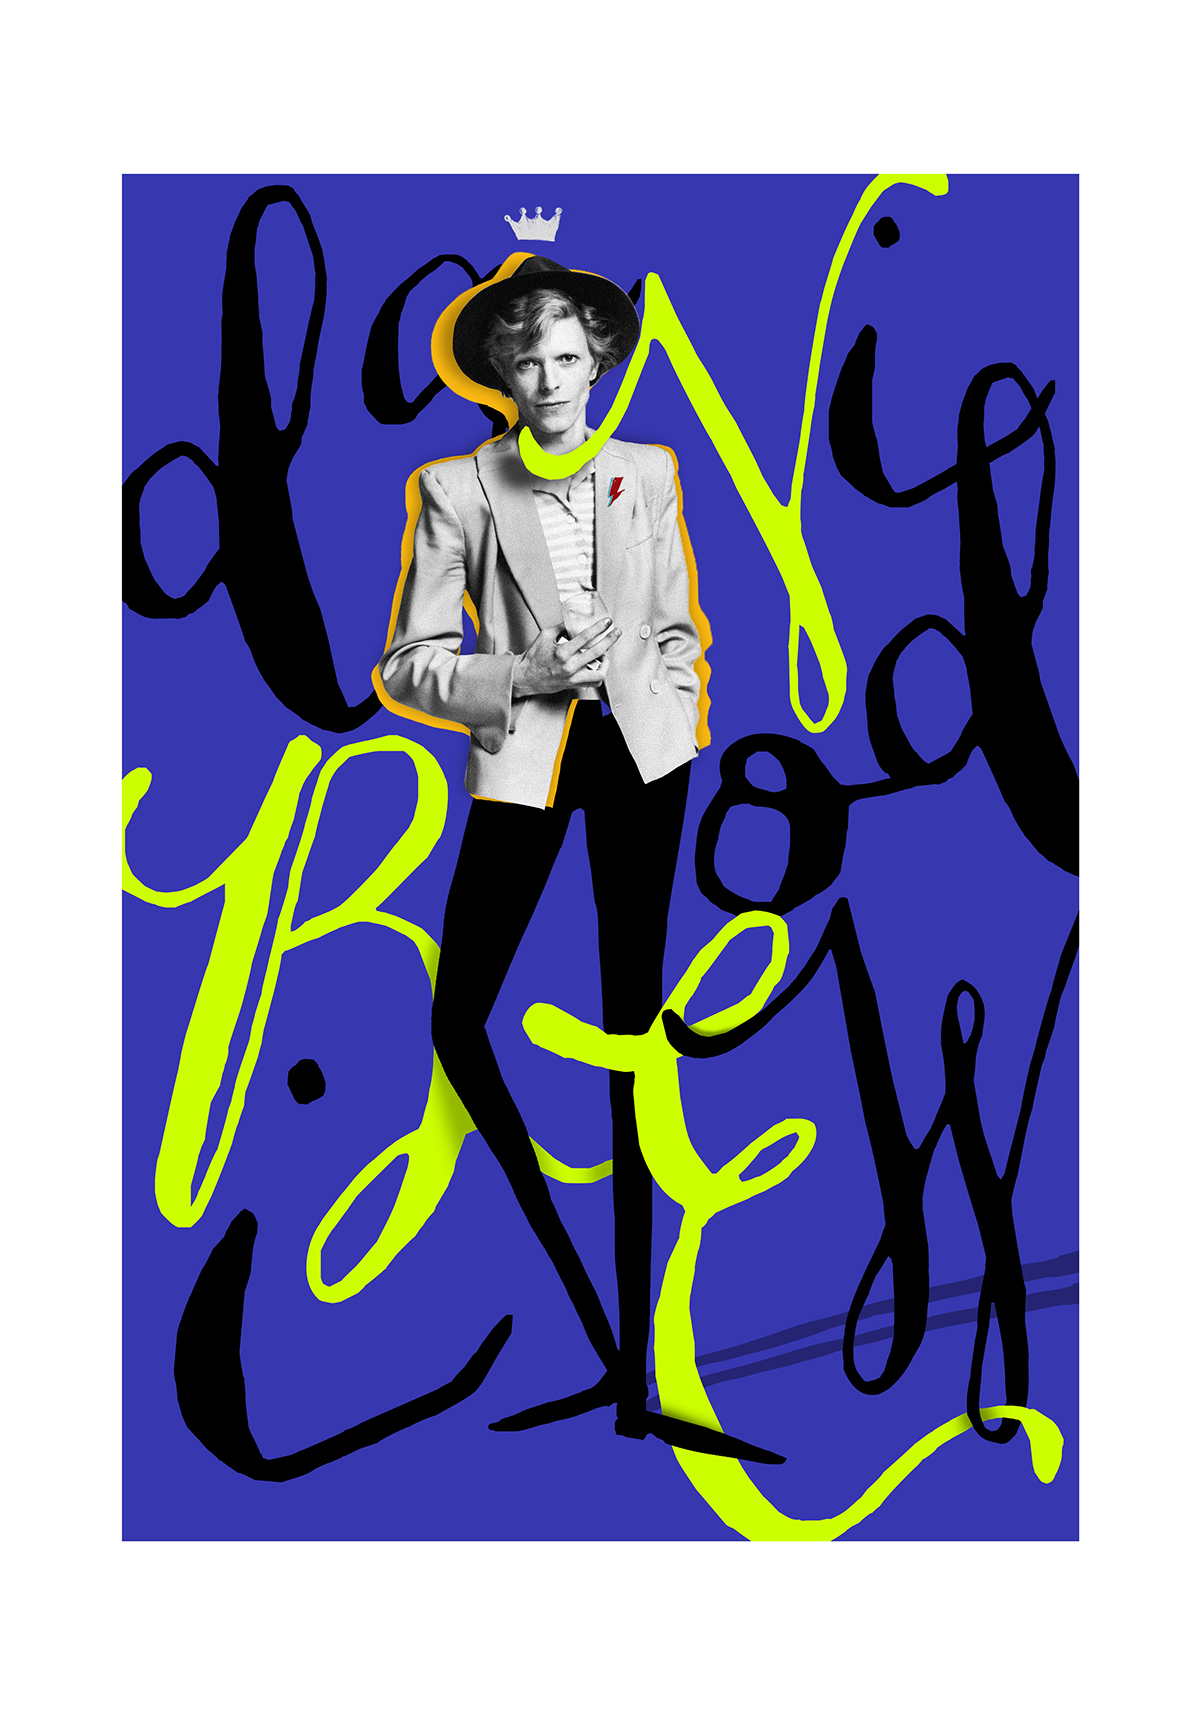 art poster design david bowie fubiz designer London BlackStar british Singer legend artist istanbul